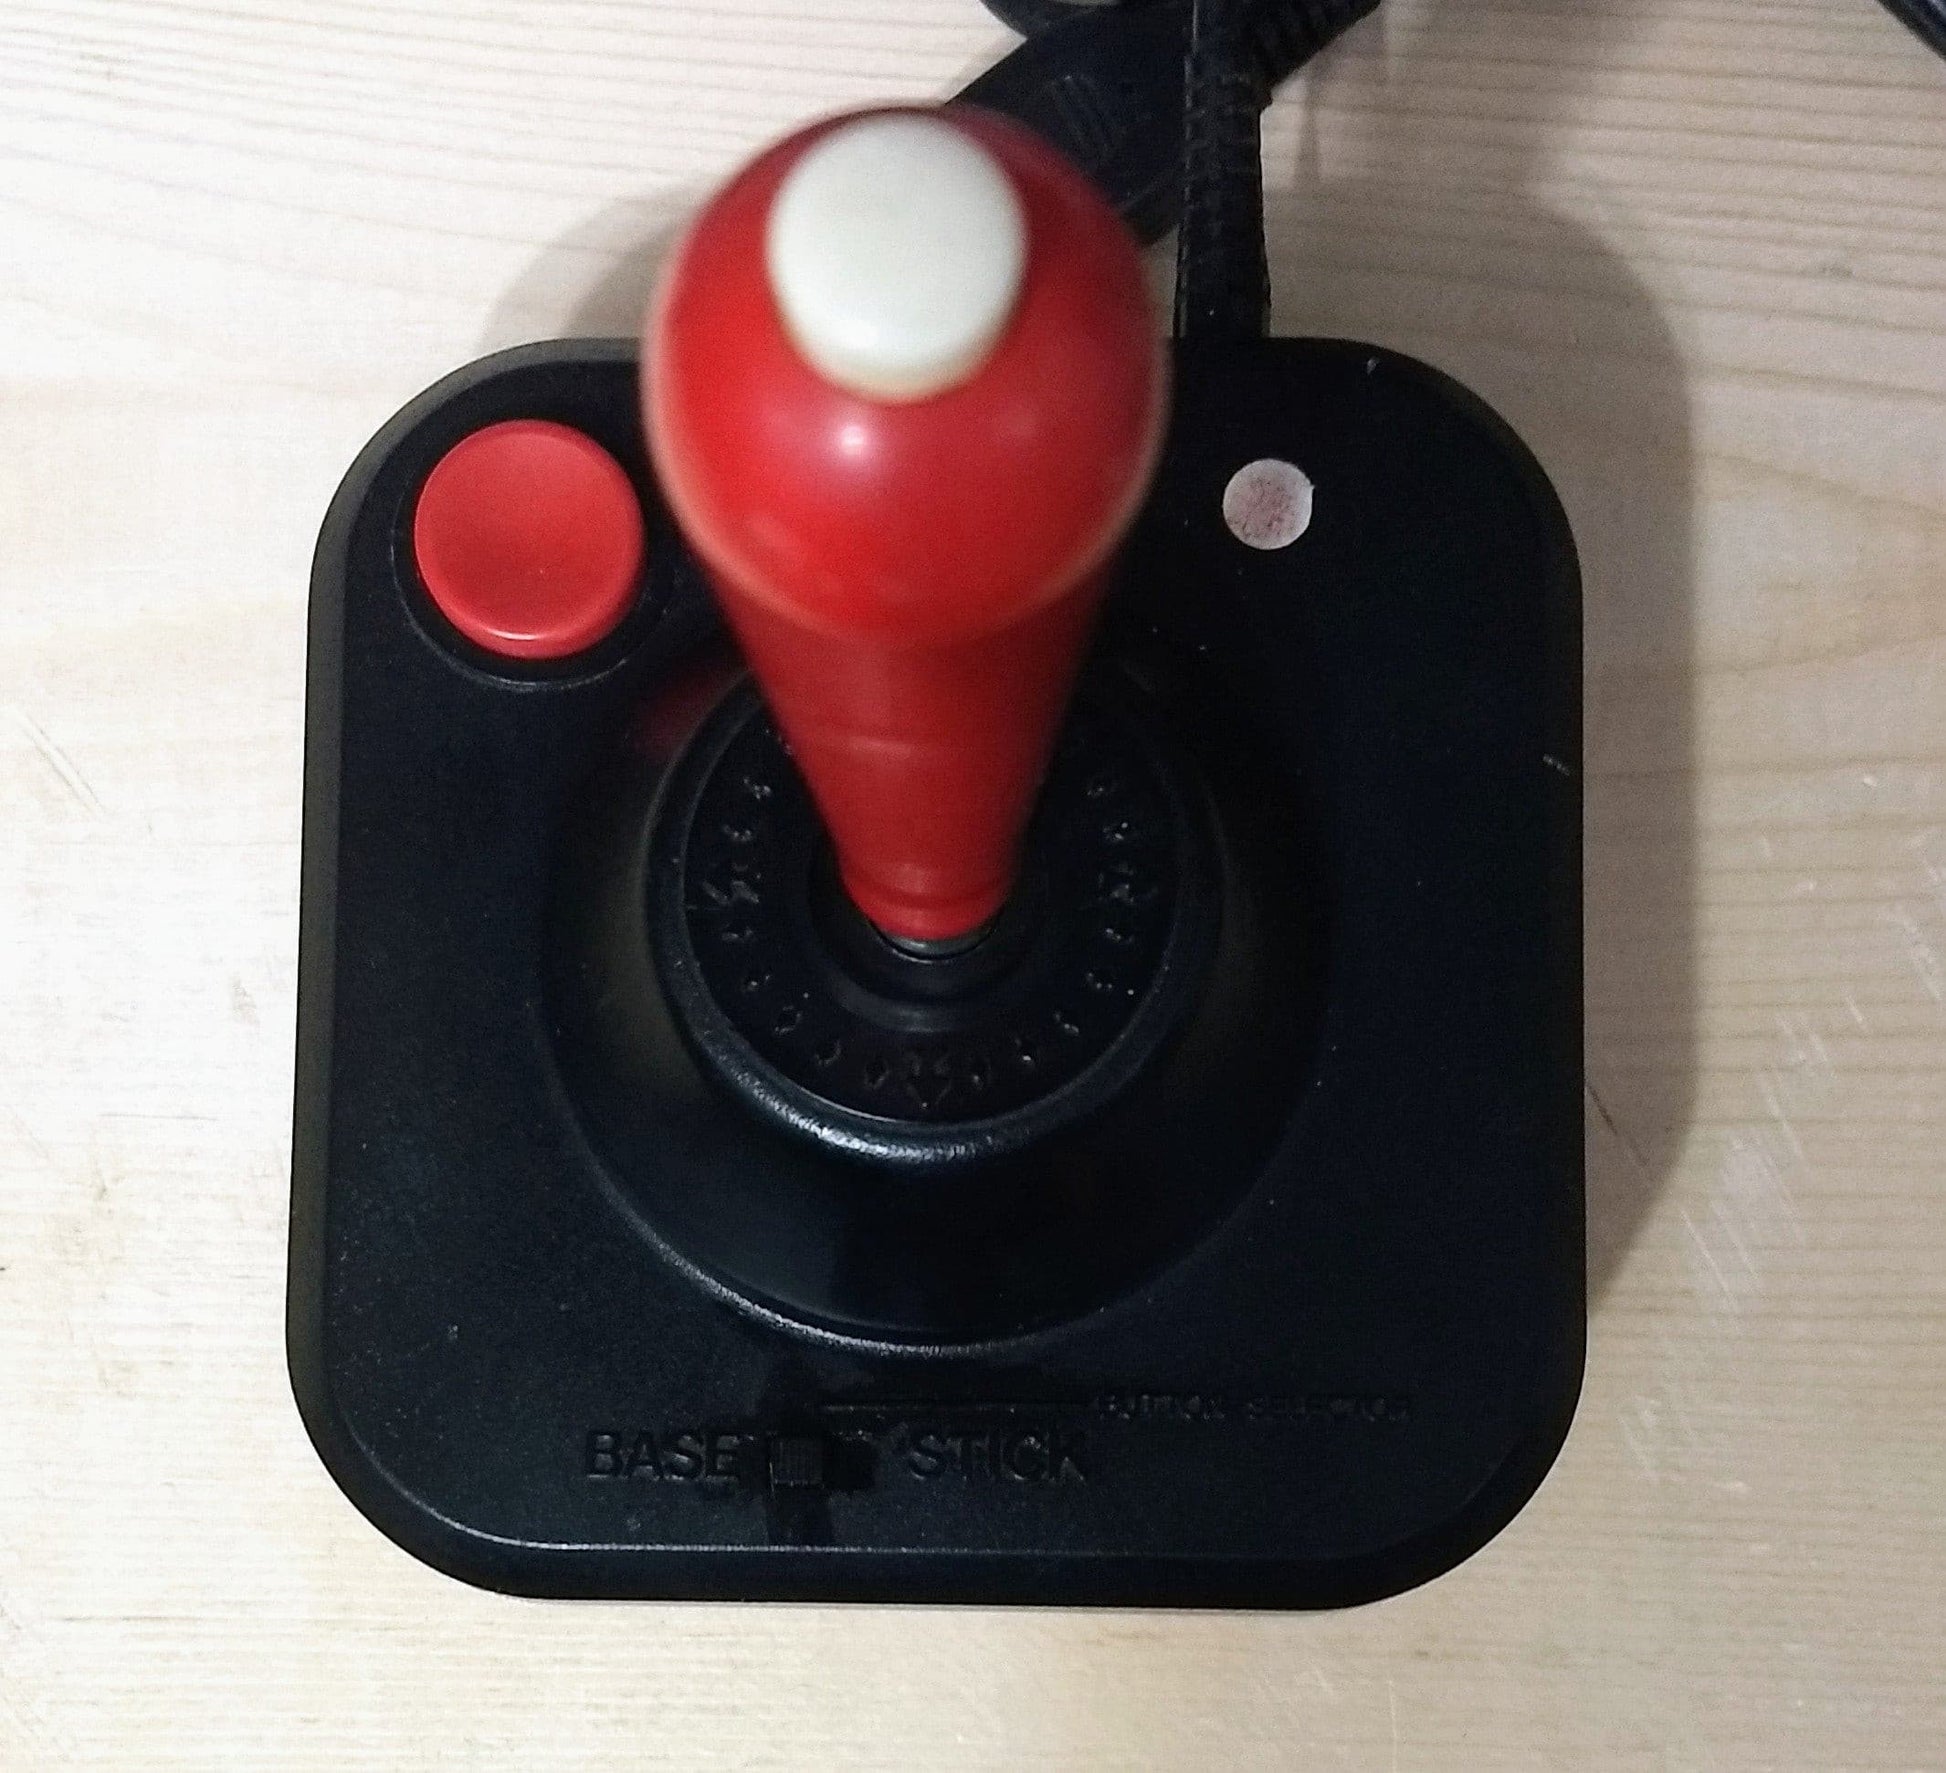 MANETTE WICO COMMAND CONTROL JOYSTICK ATARI 2600 ET COMMODORE 64 CONTROLLER - jeux video game-x